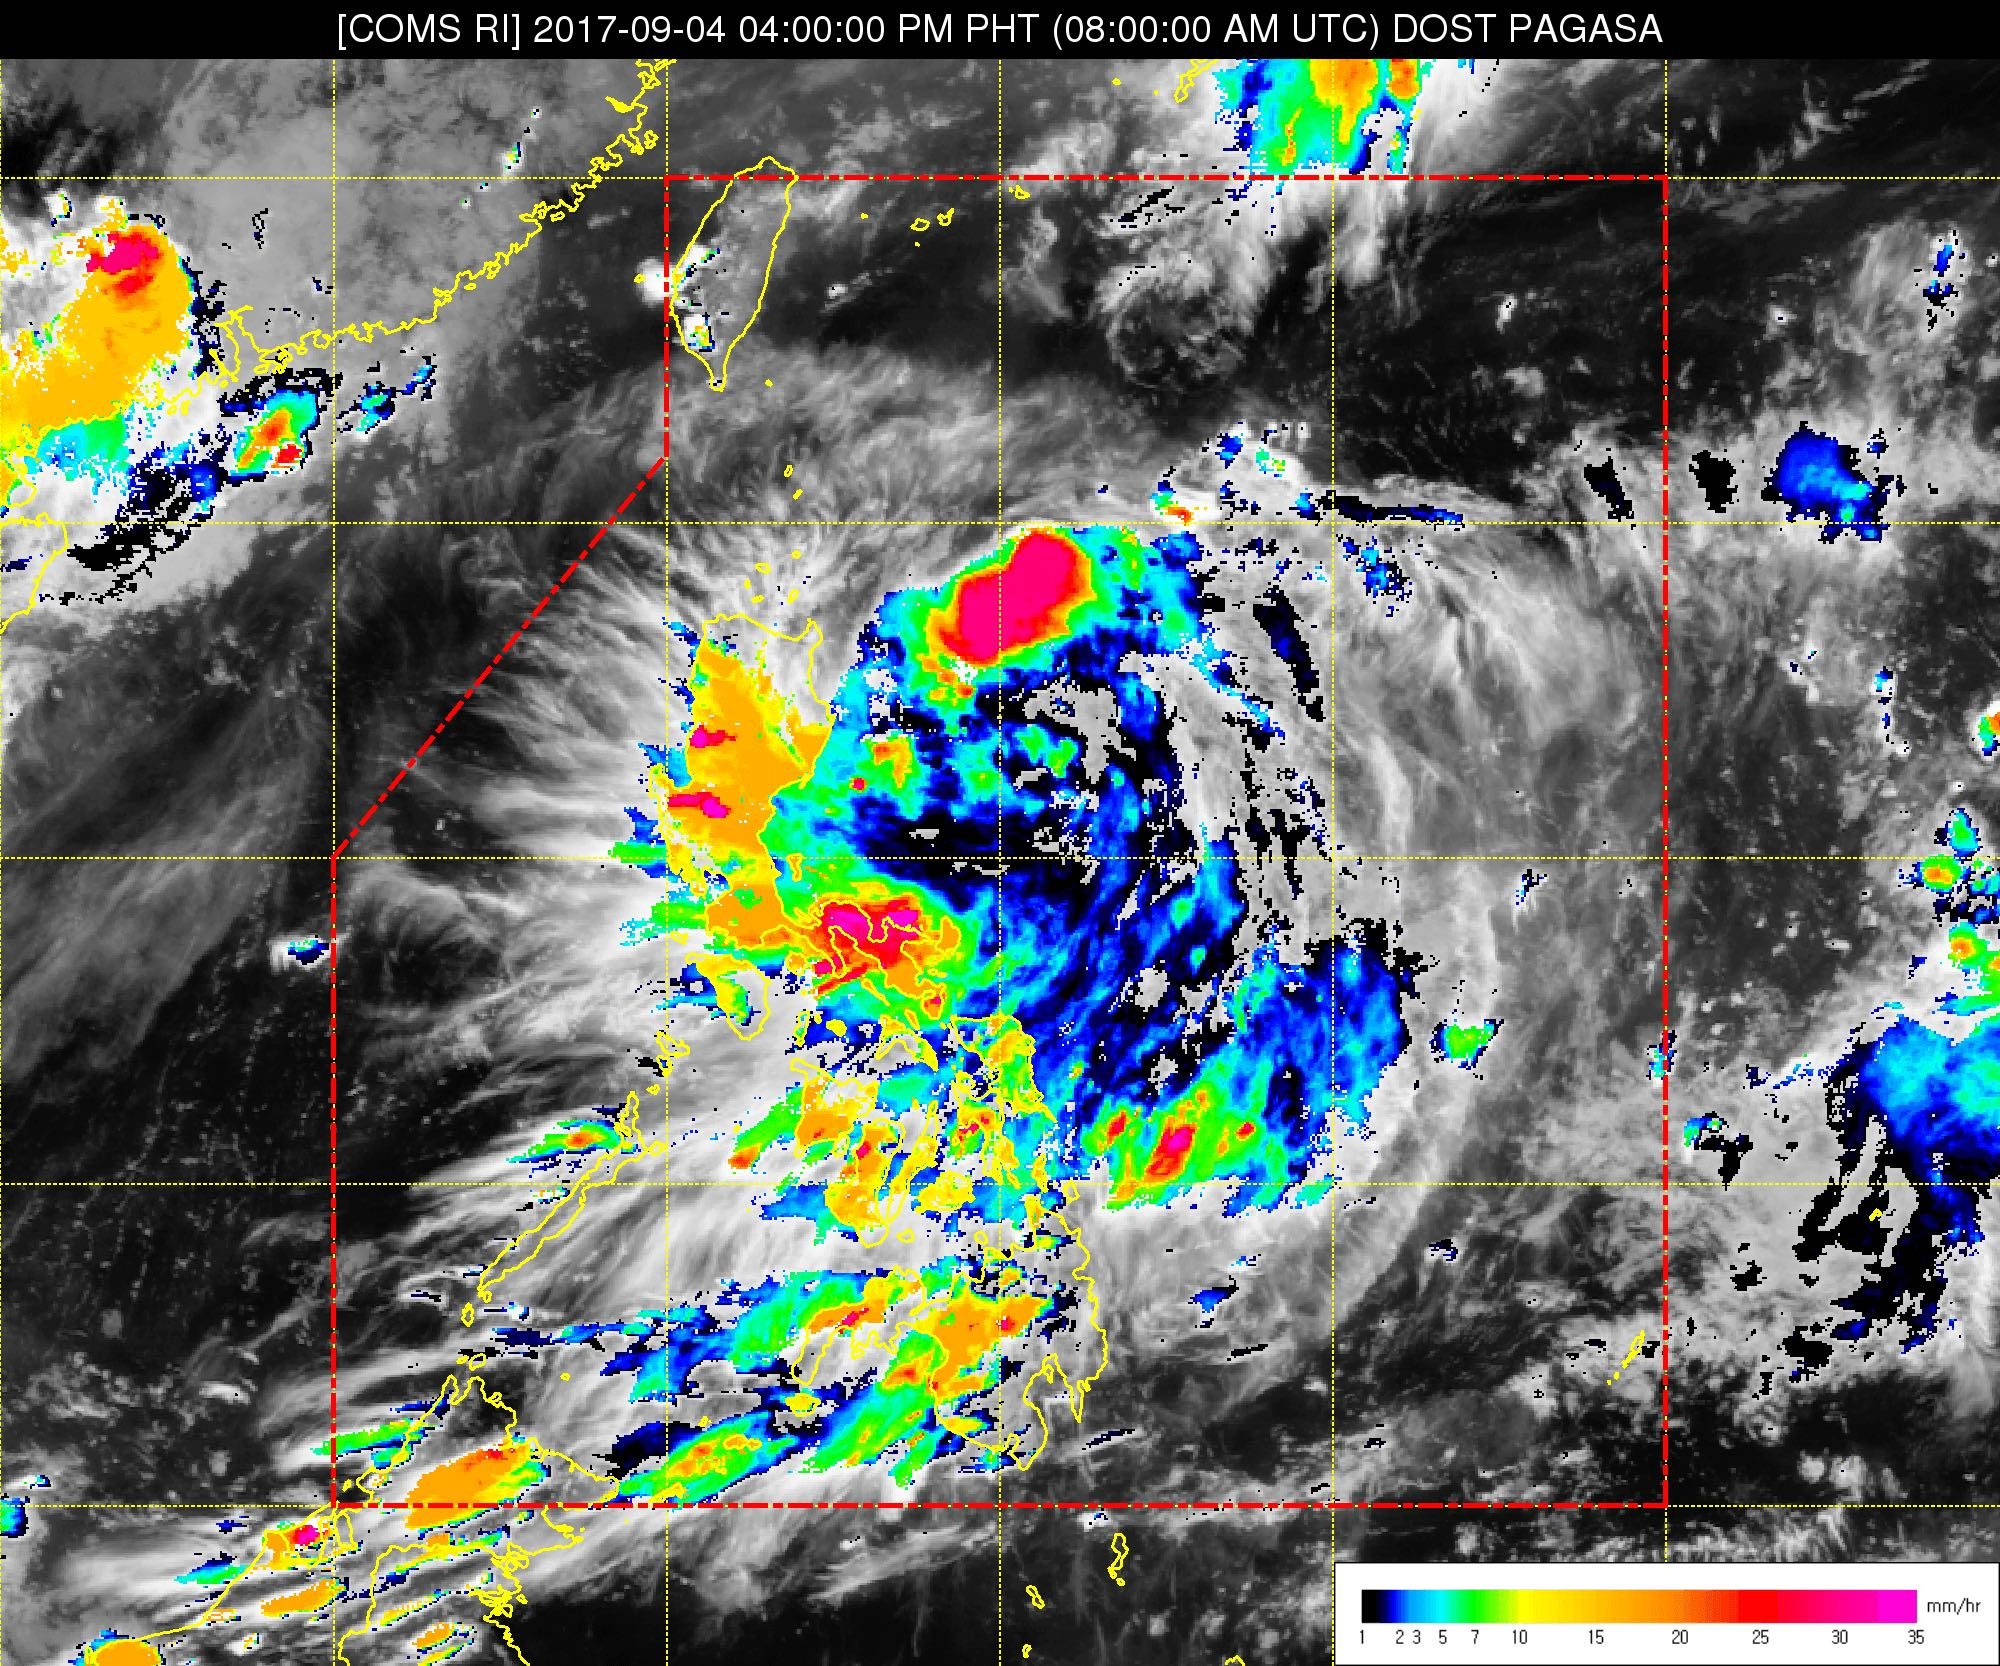 Low pressure area intensifies into Tropical Depression Kiko